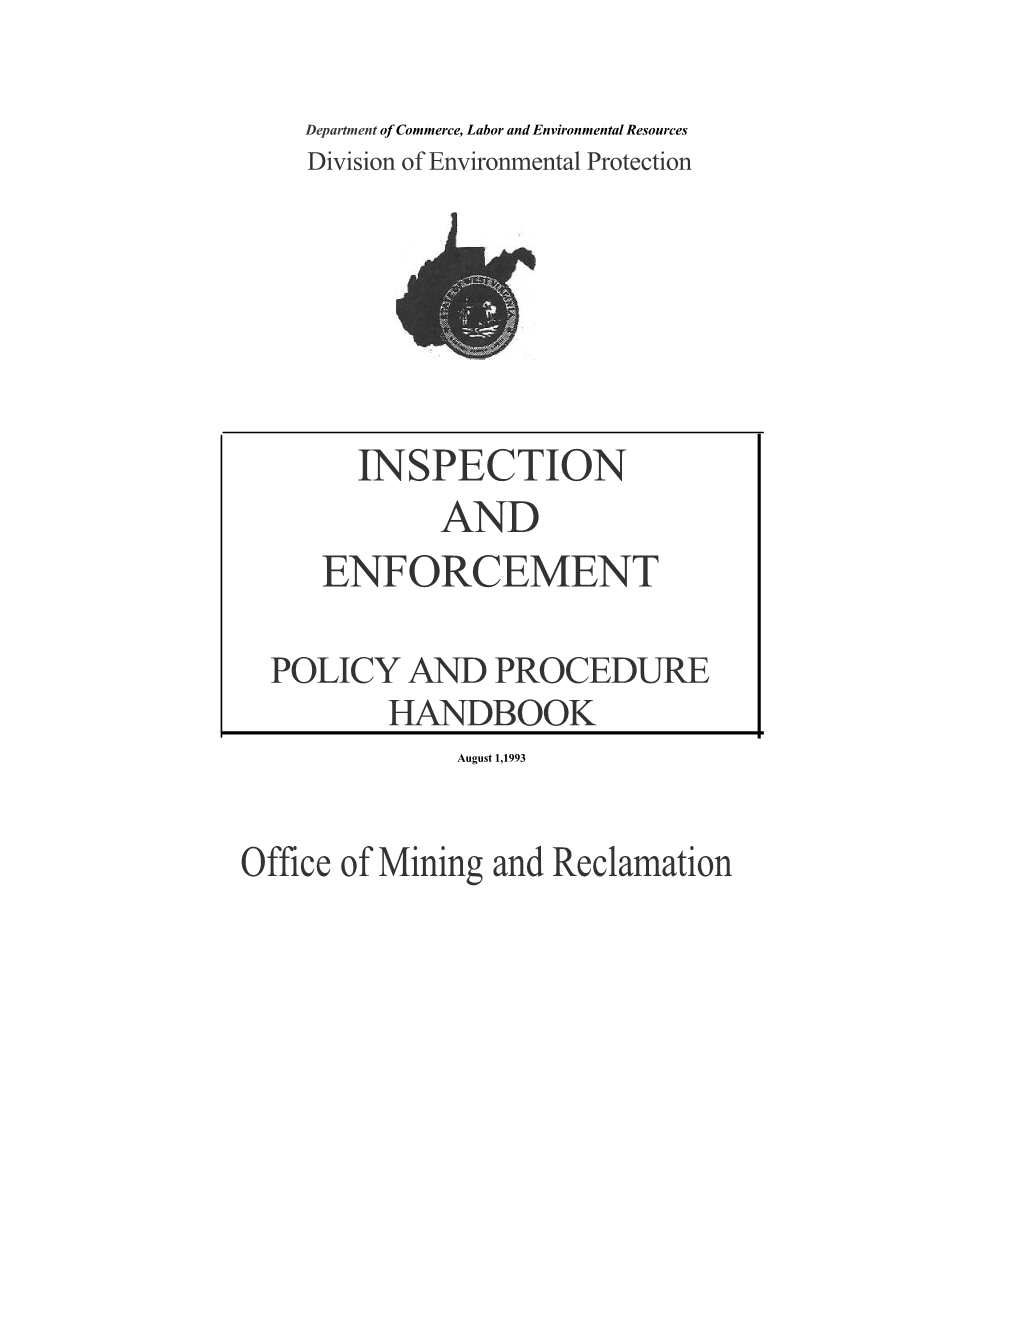 Complete Inspection and Enforcement Handbook